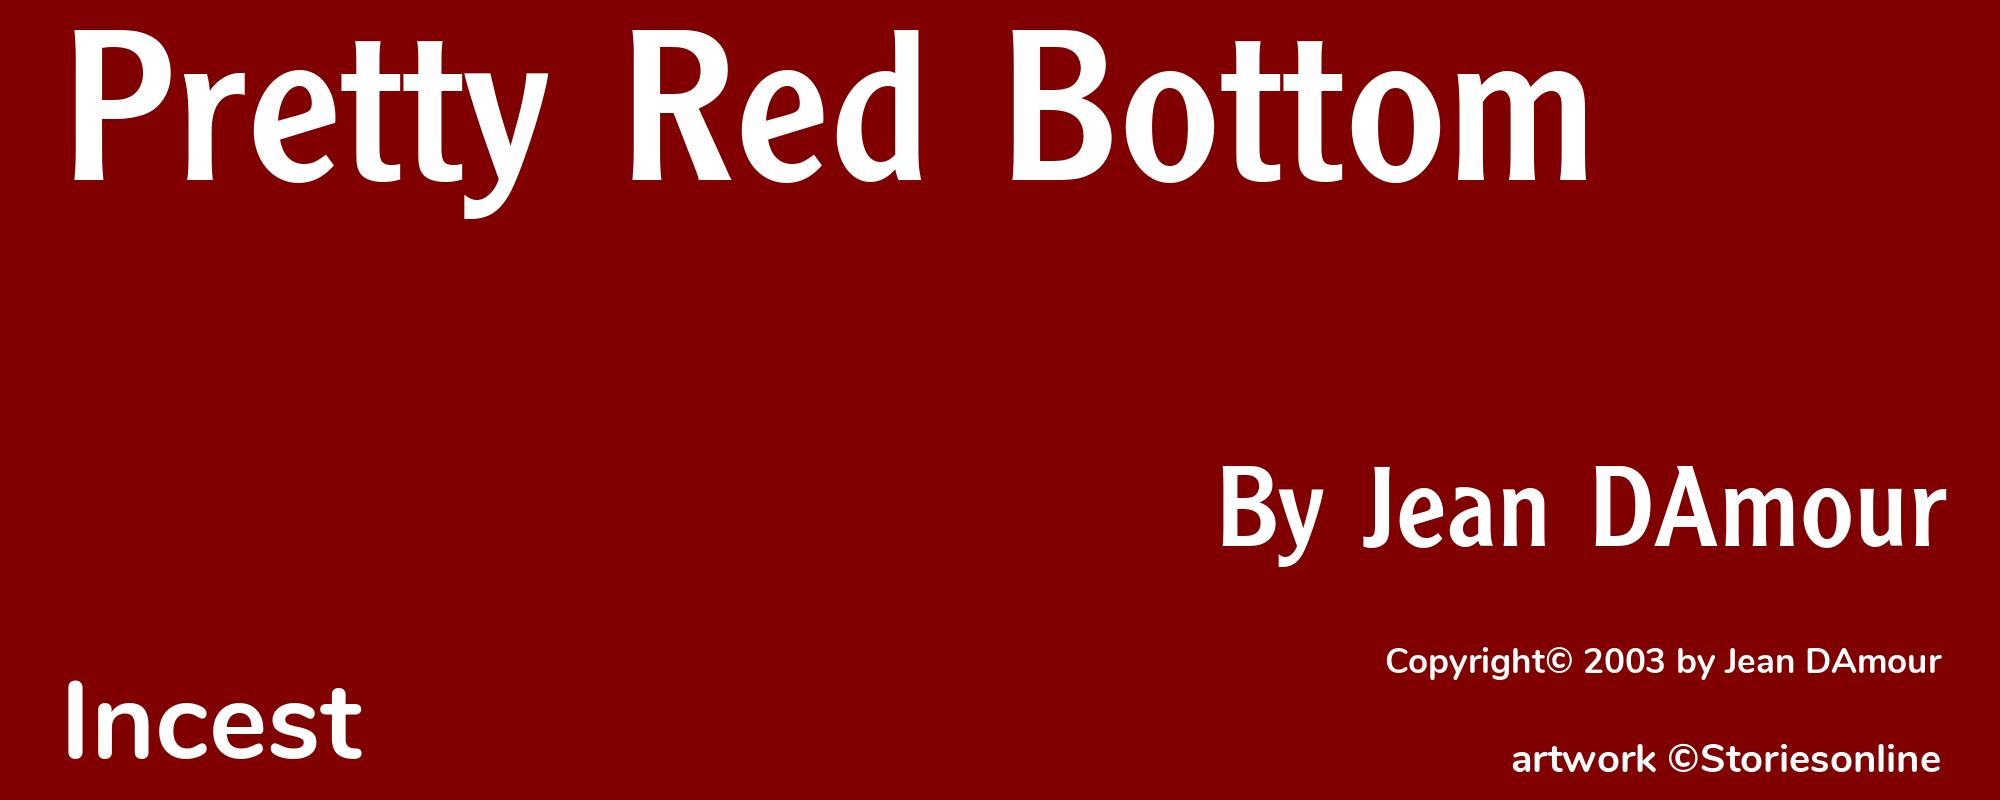 Pretty Red Bottom - Cover